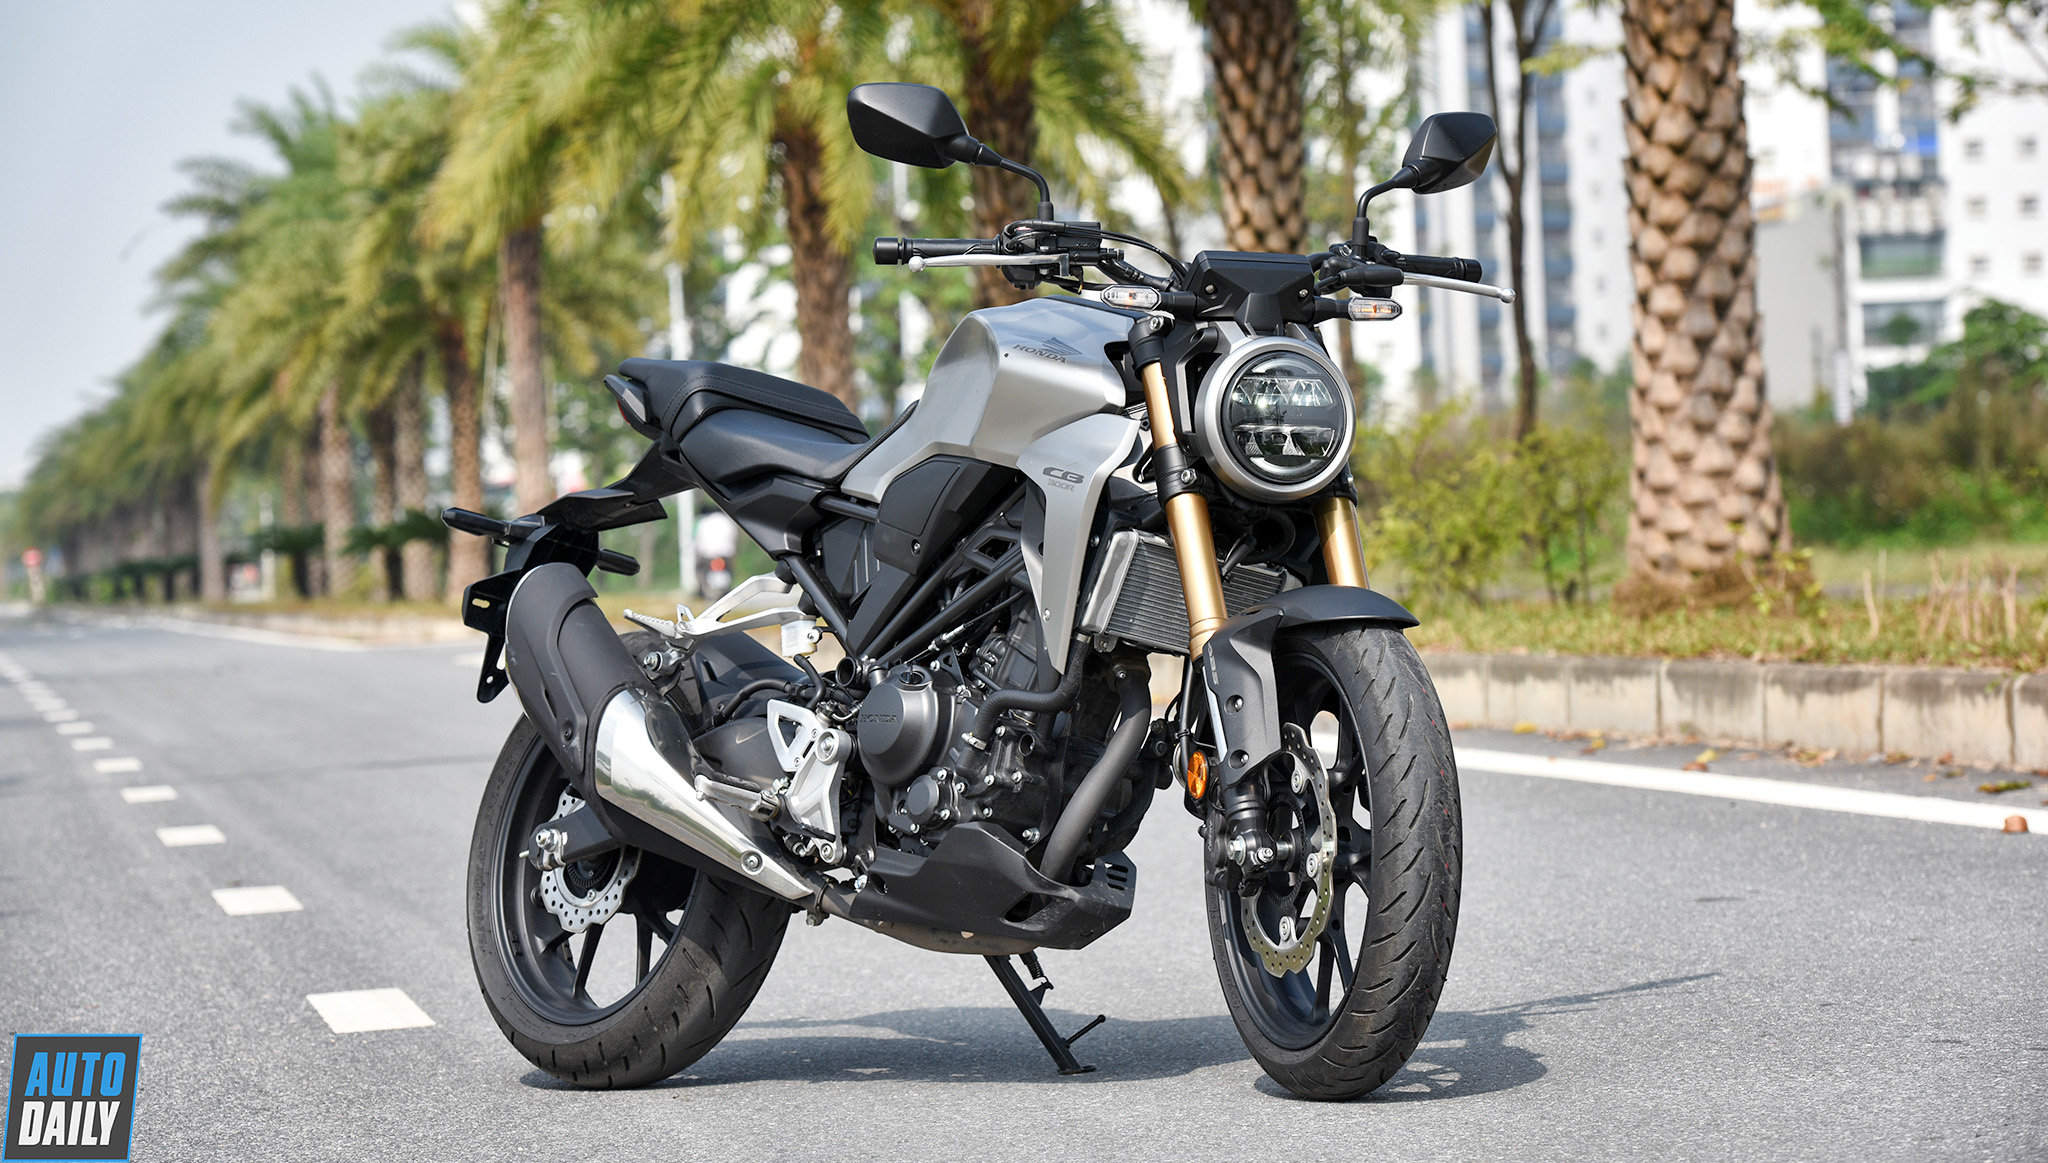 Honda CB300R 2019 review: Beautiful design, reasonable price dsc-7739-copy.jpg